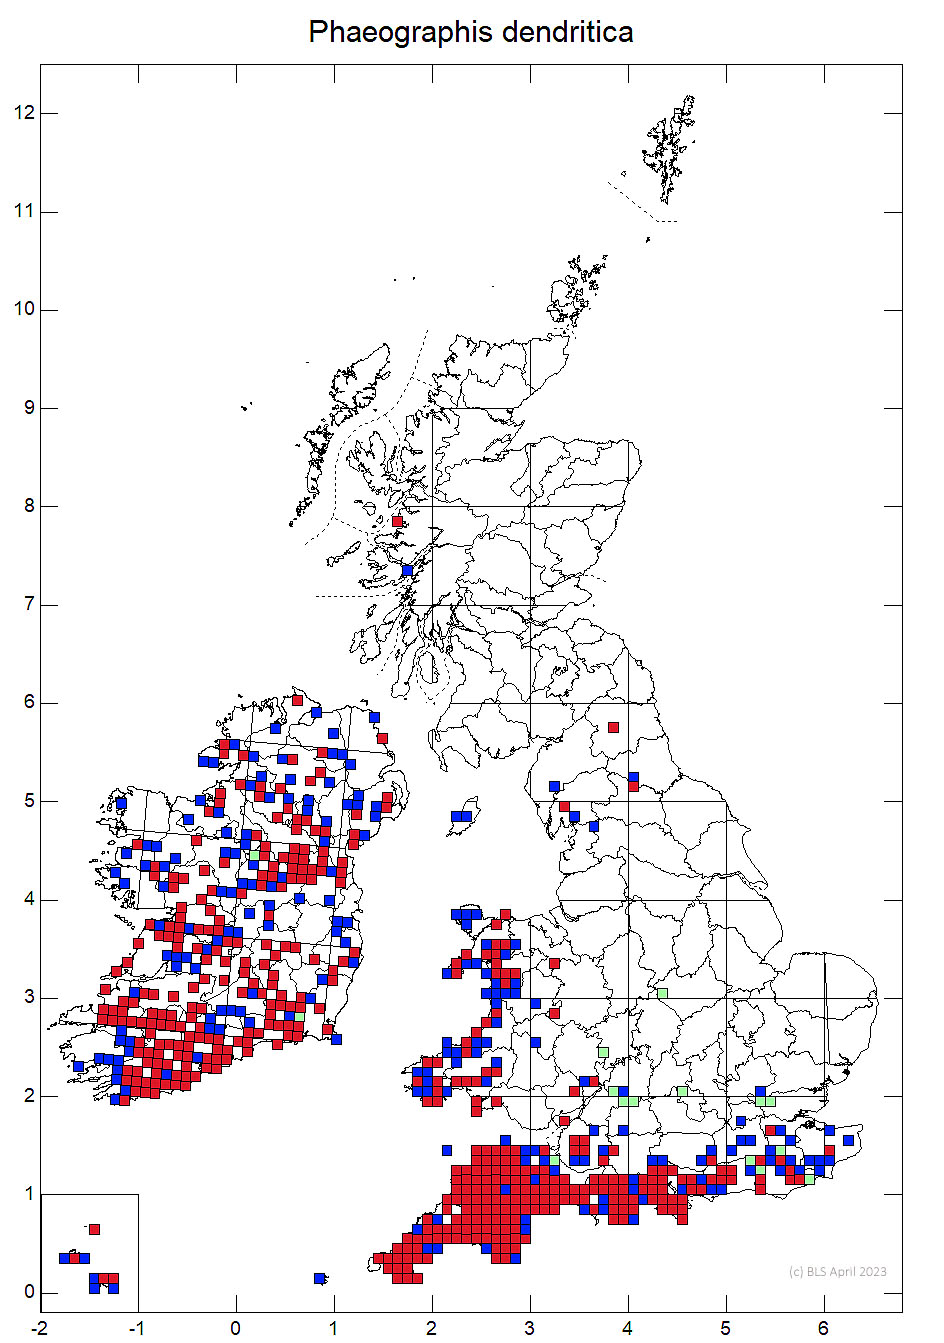 Phaeographis dendritica 10km sq distribution map